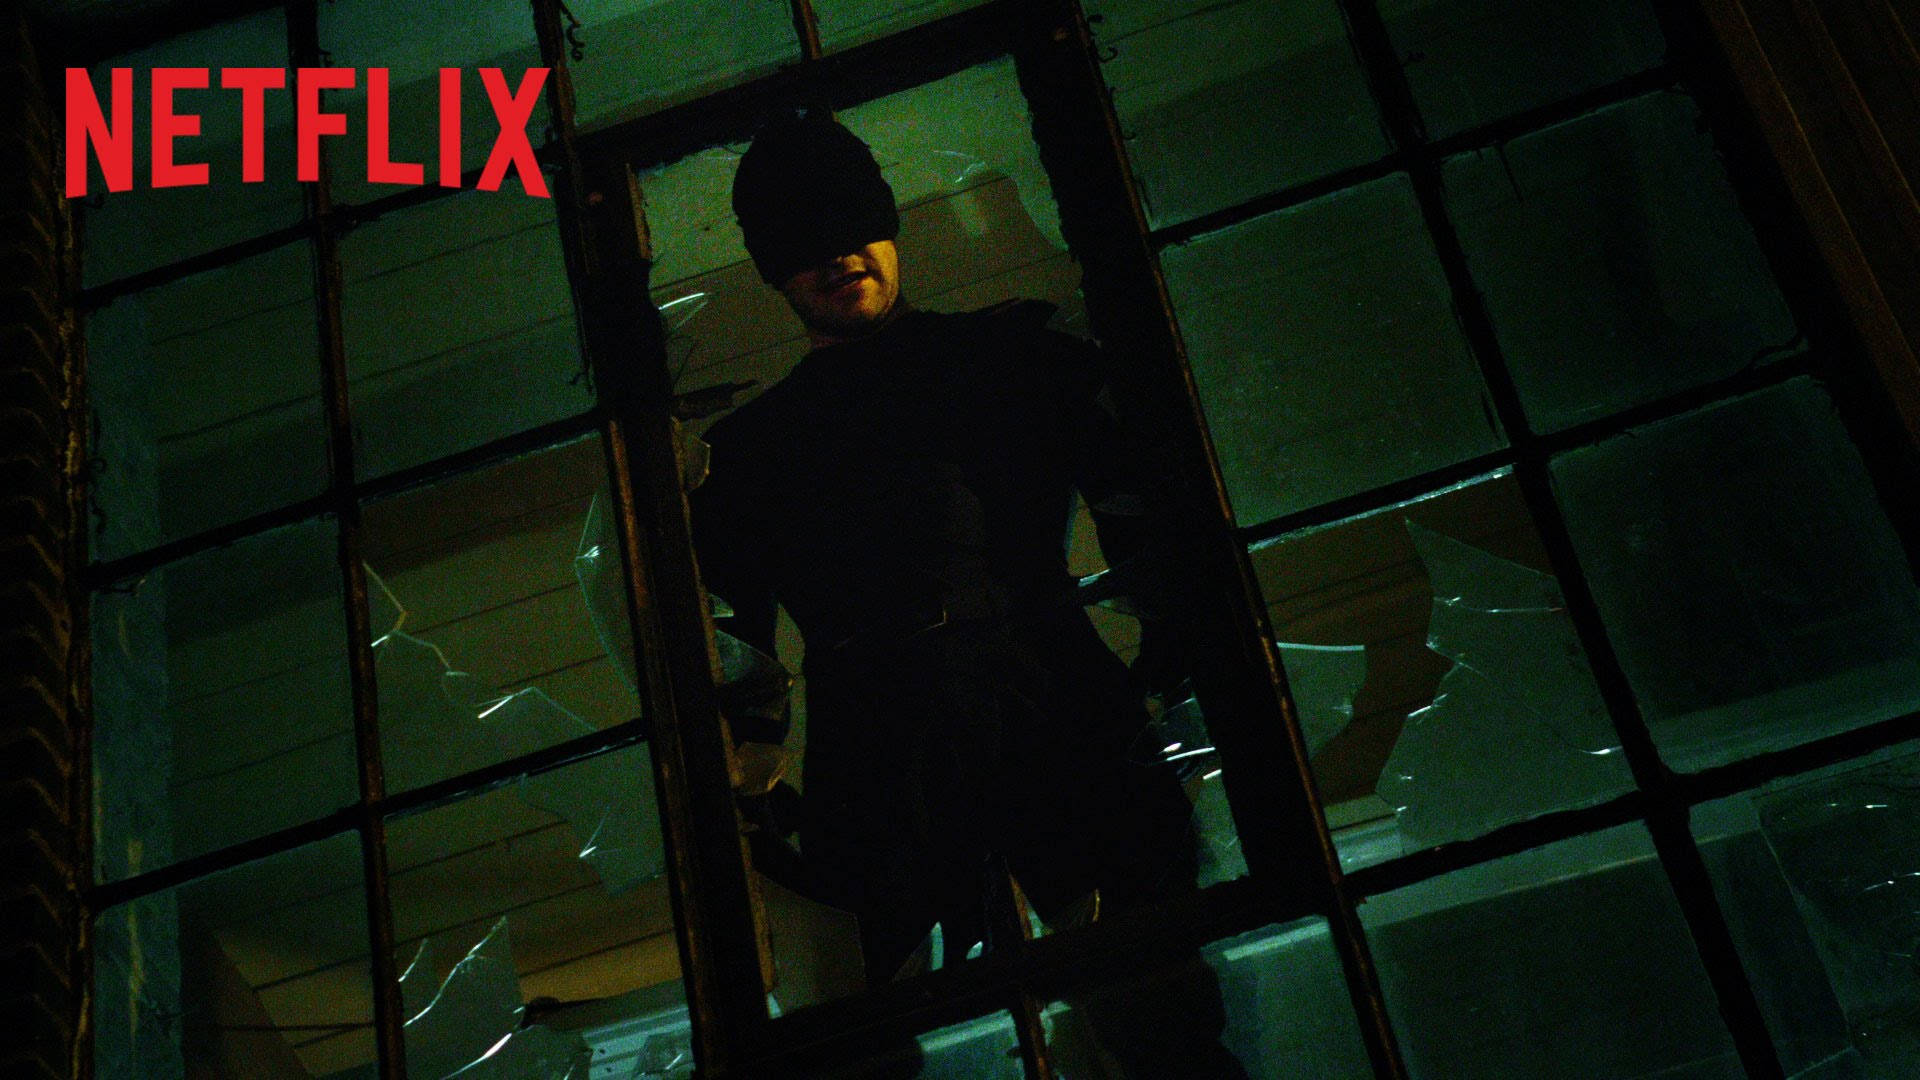 Netflix Daredevil Window Scene Background